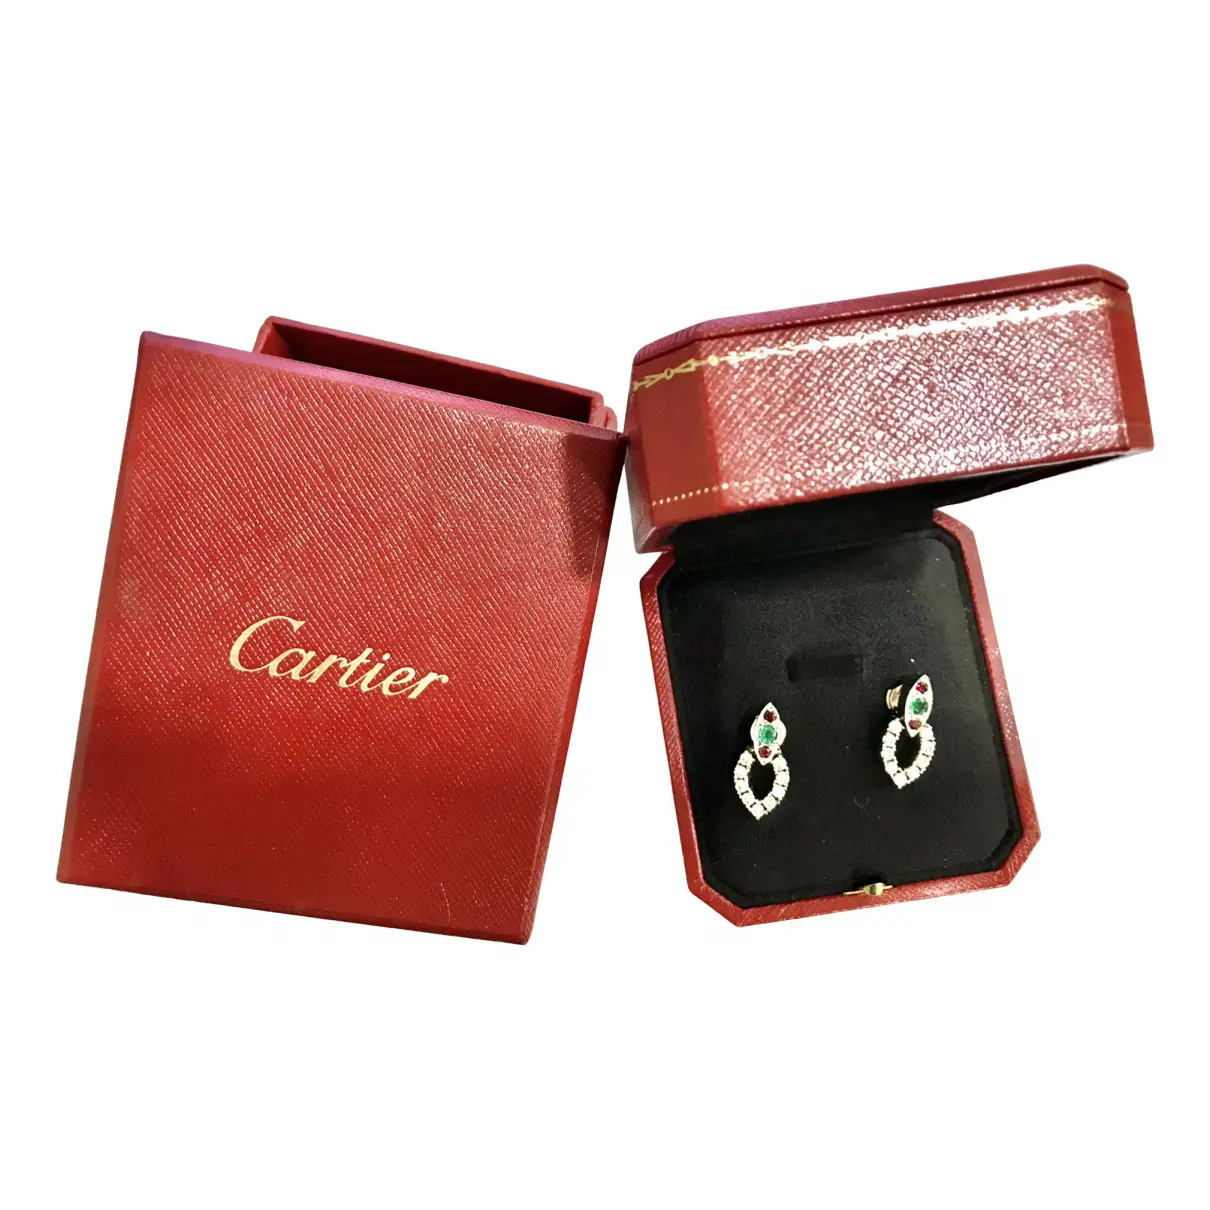 Buy Cartier White gold earrings online